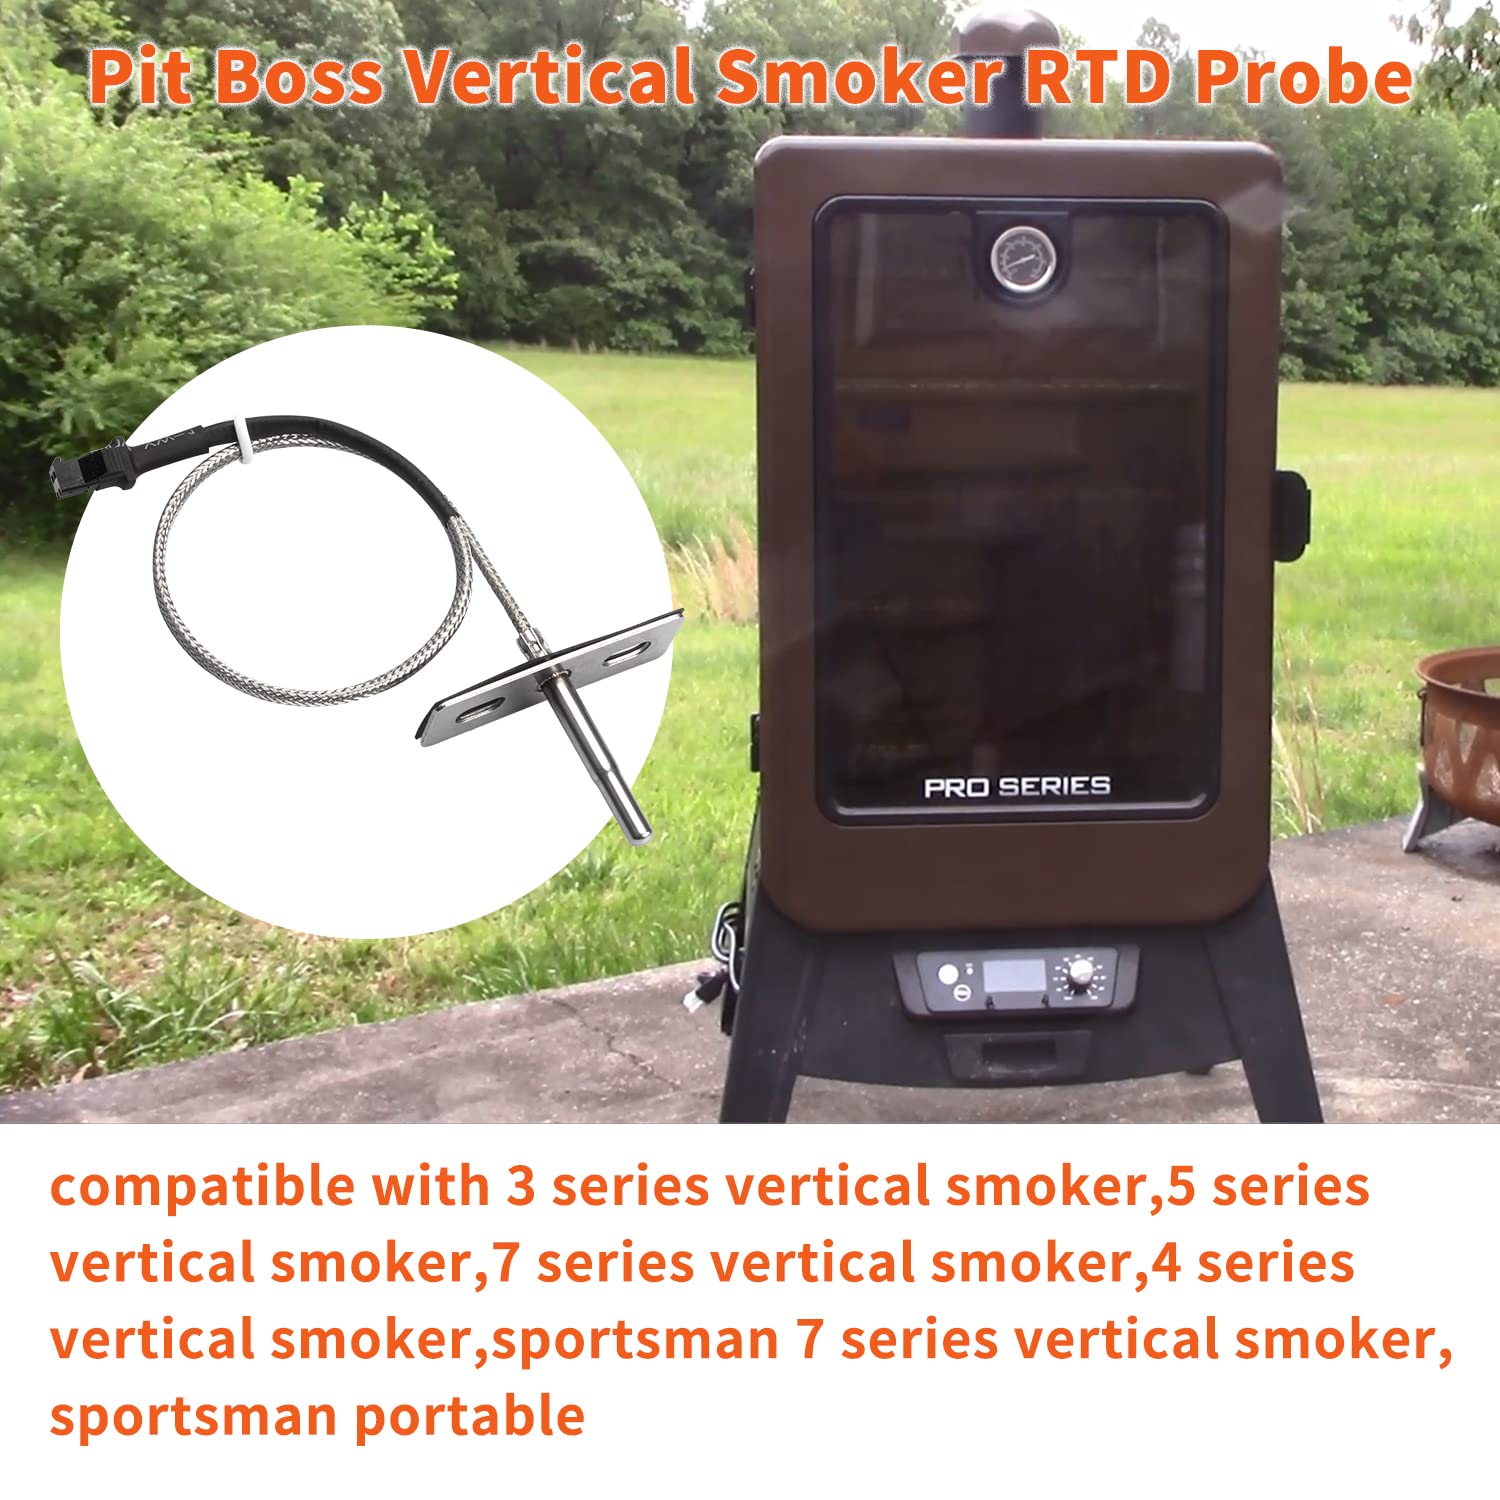 RTD Temperature Probe Sensor for Pit Boss 3, 5, 7 Series, Pro